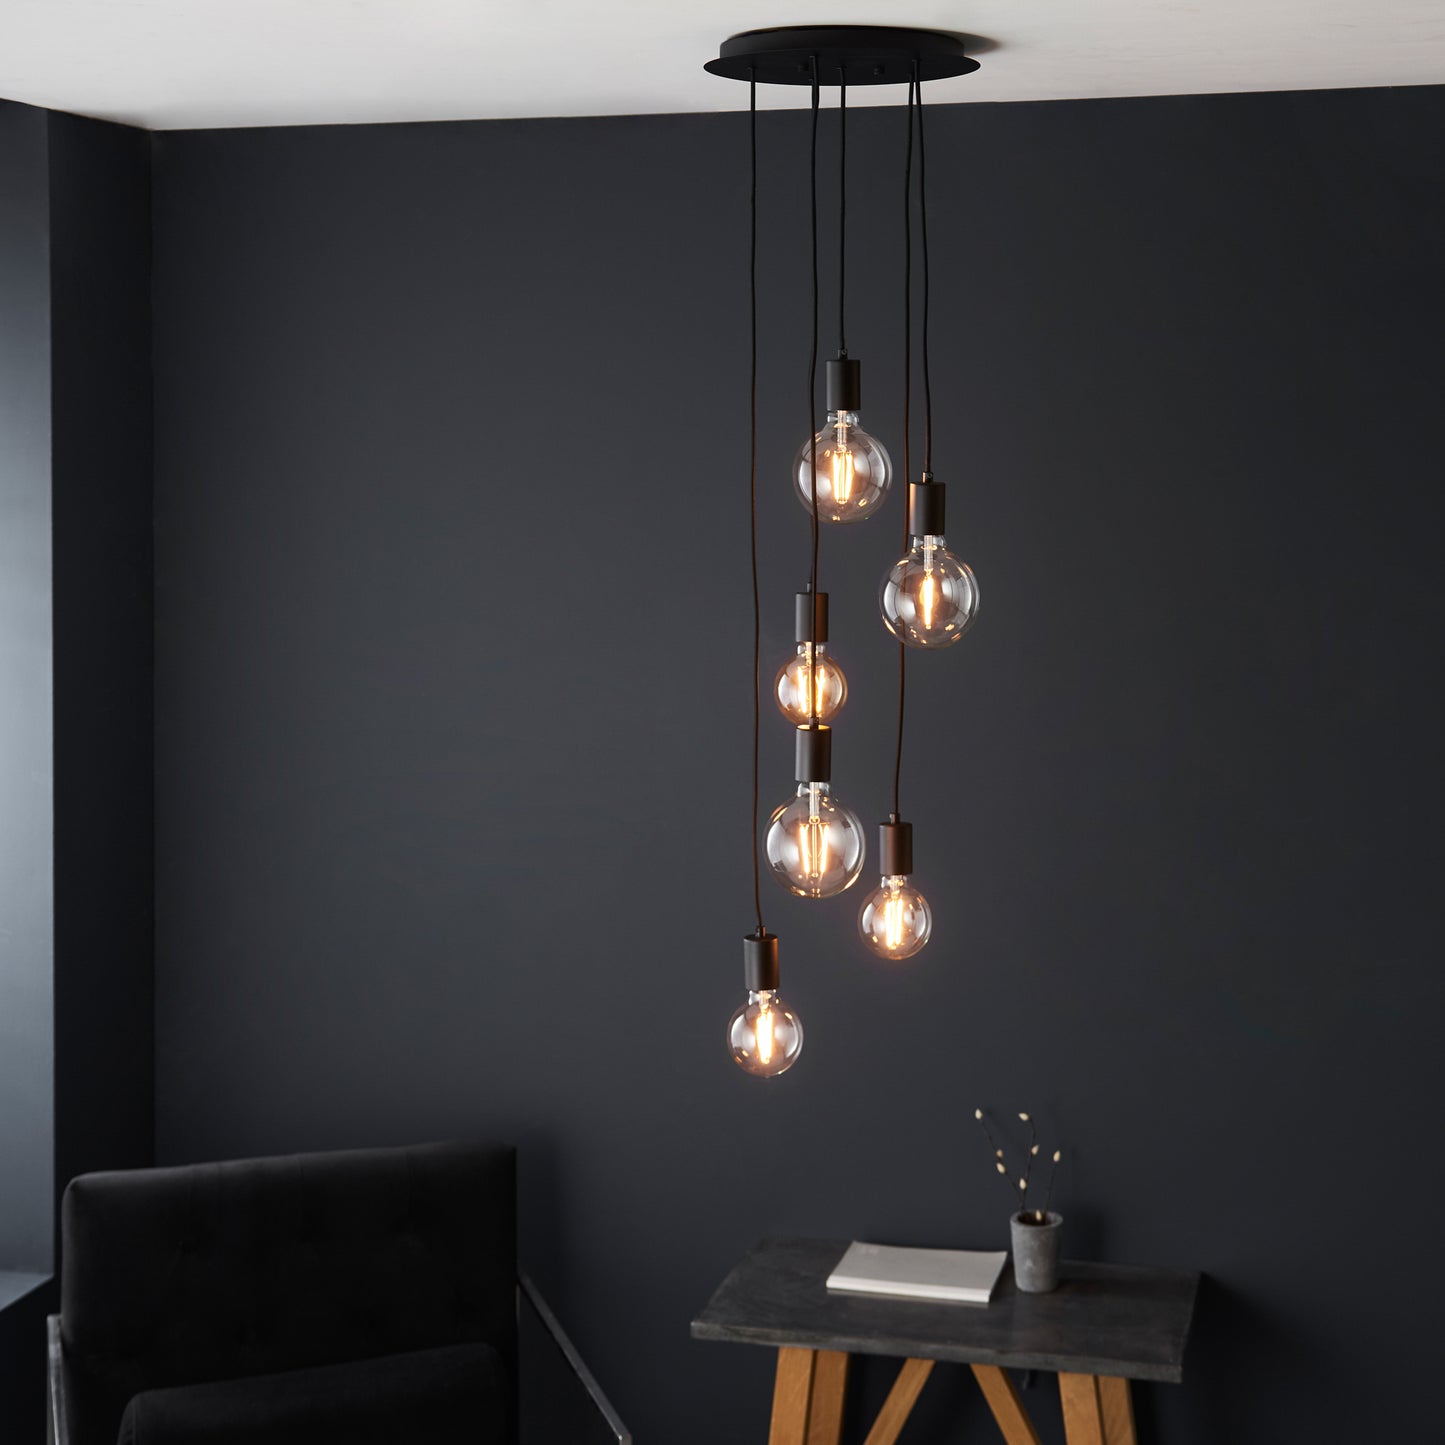 Five Studio 6 Pendant Light Matt Black enhancing interior decor, hanging from a black ceiling.